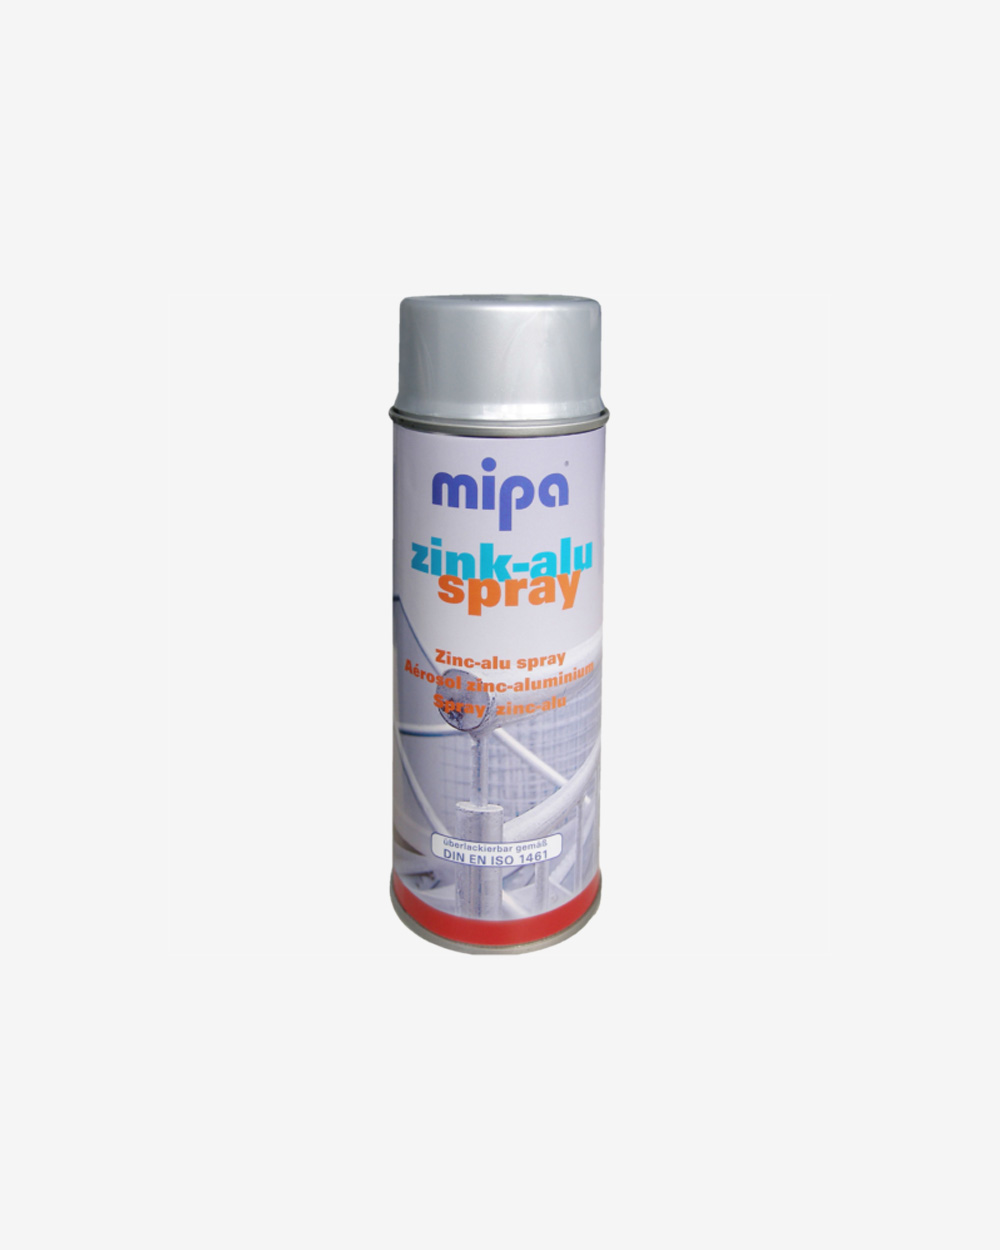 Se Mipa Zink-Alu Spray hos Picment.dk